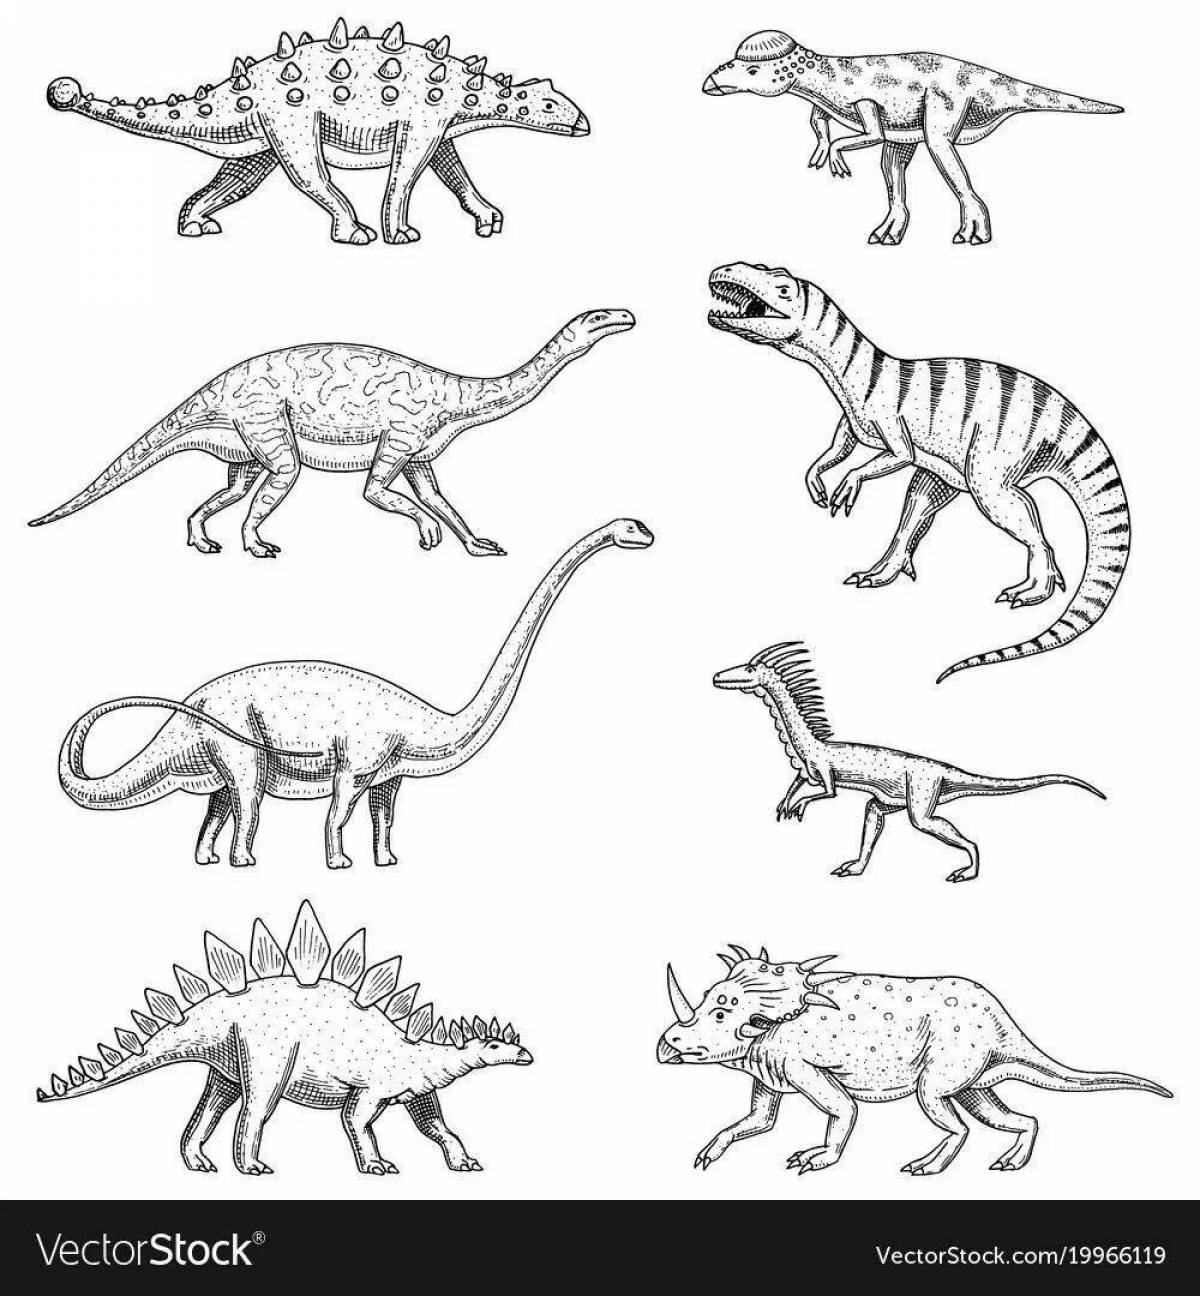 Раскраска с динозаврами пахицилозавр